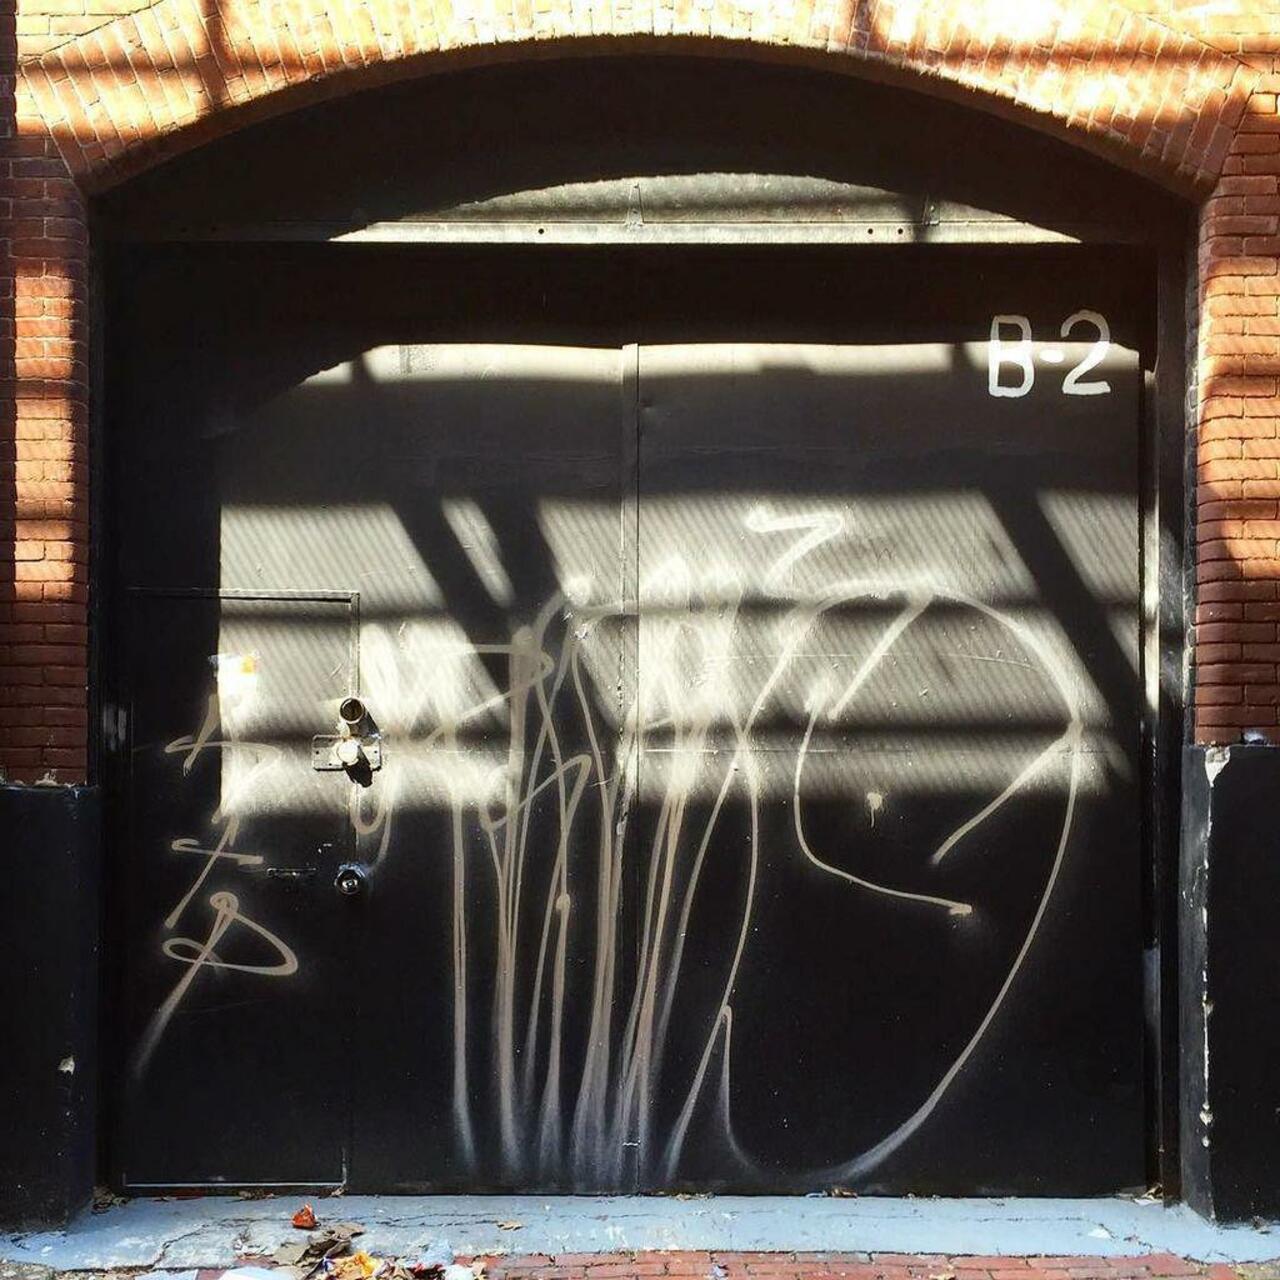 RT @artpushr: via #graffitijawn "http://ift.tt/1LUy7OD" #graffiti #streetart http://t.co/tE7dGGLZDR